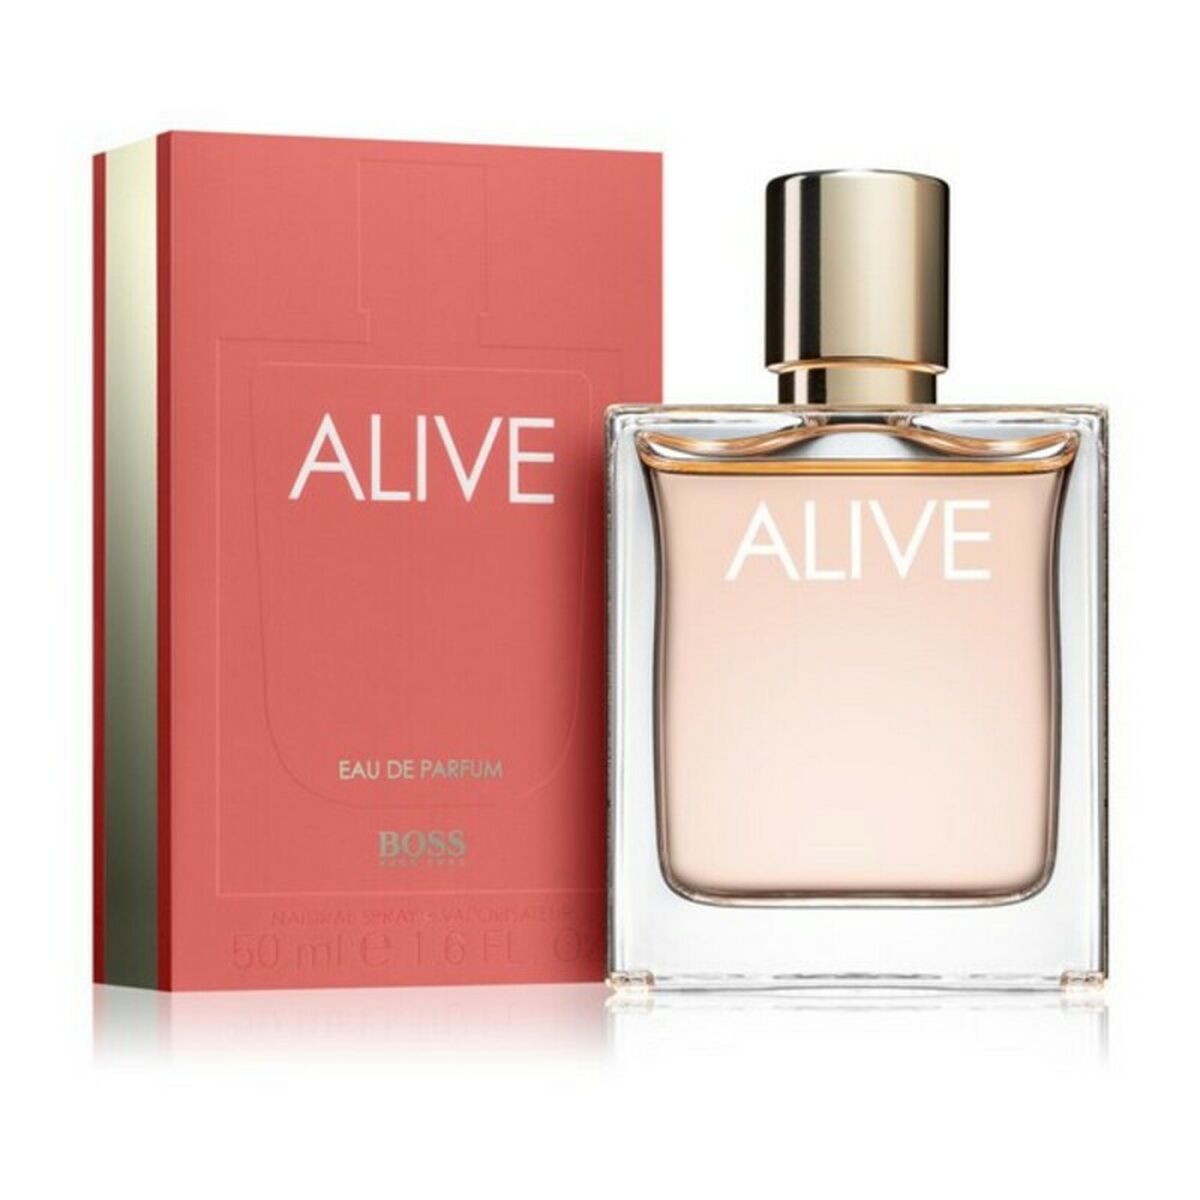 Alive Hugo Boss eau de parfum 50ml